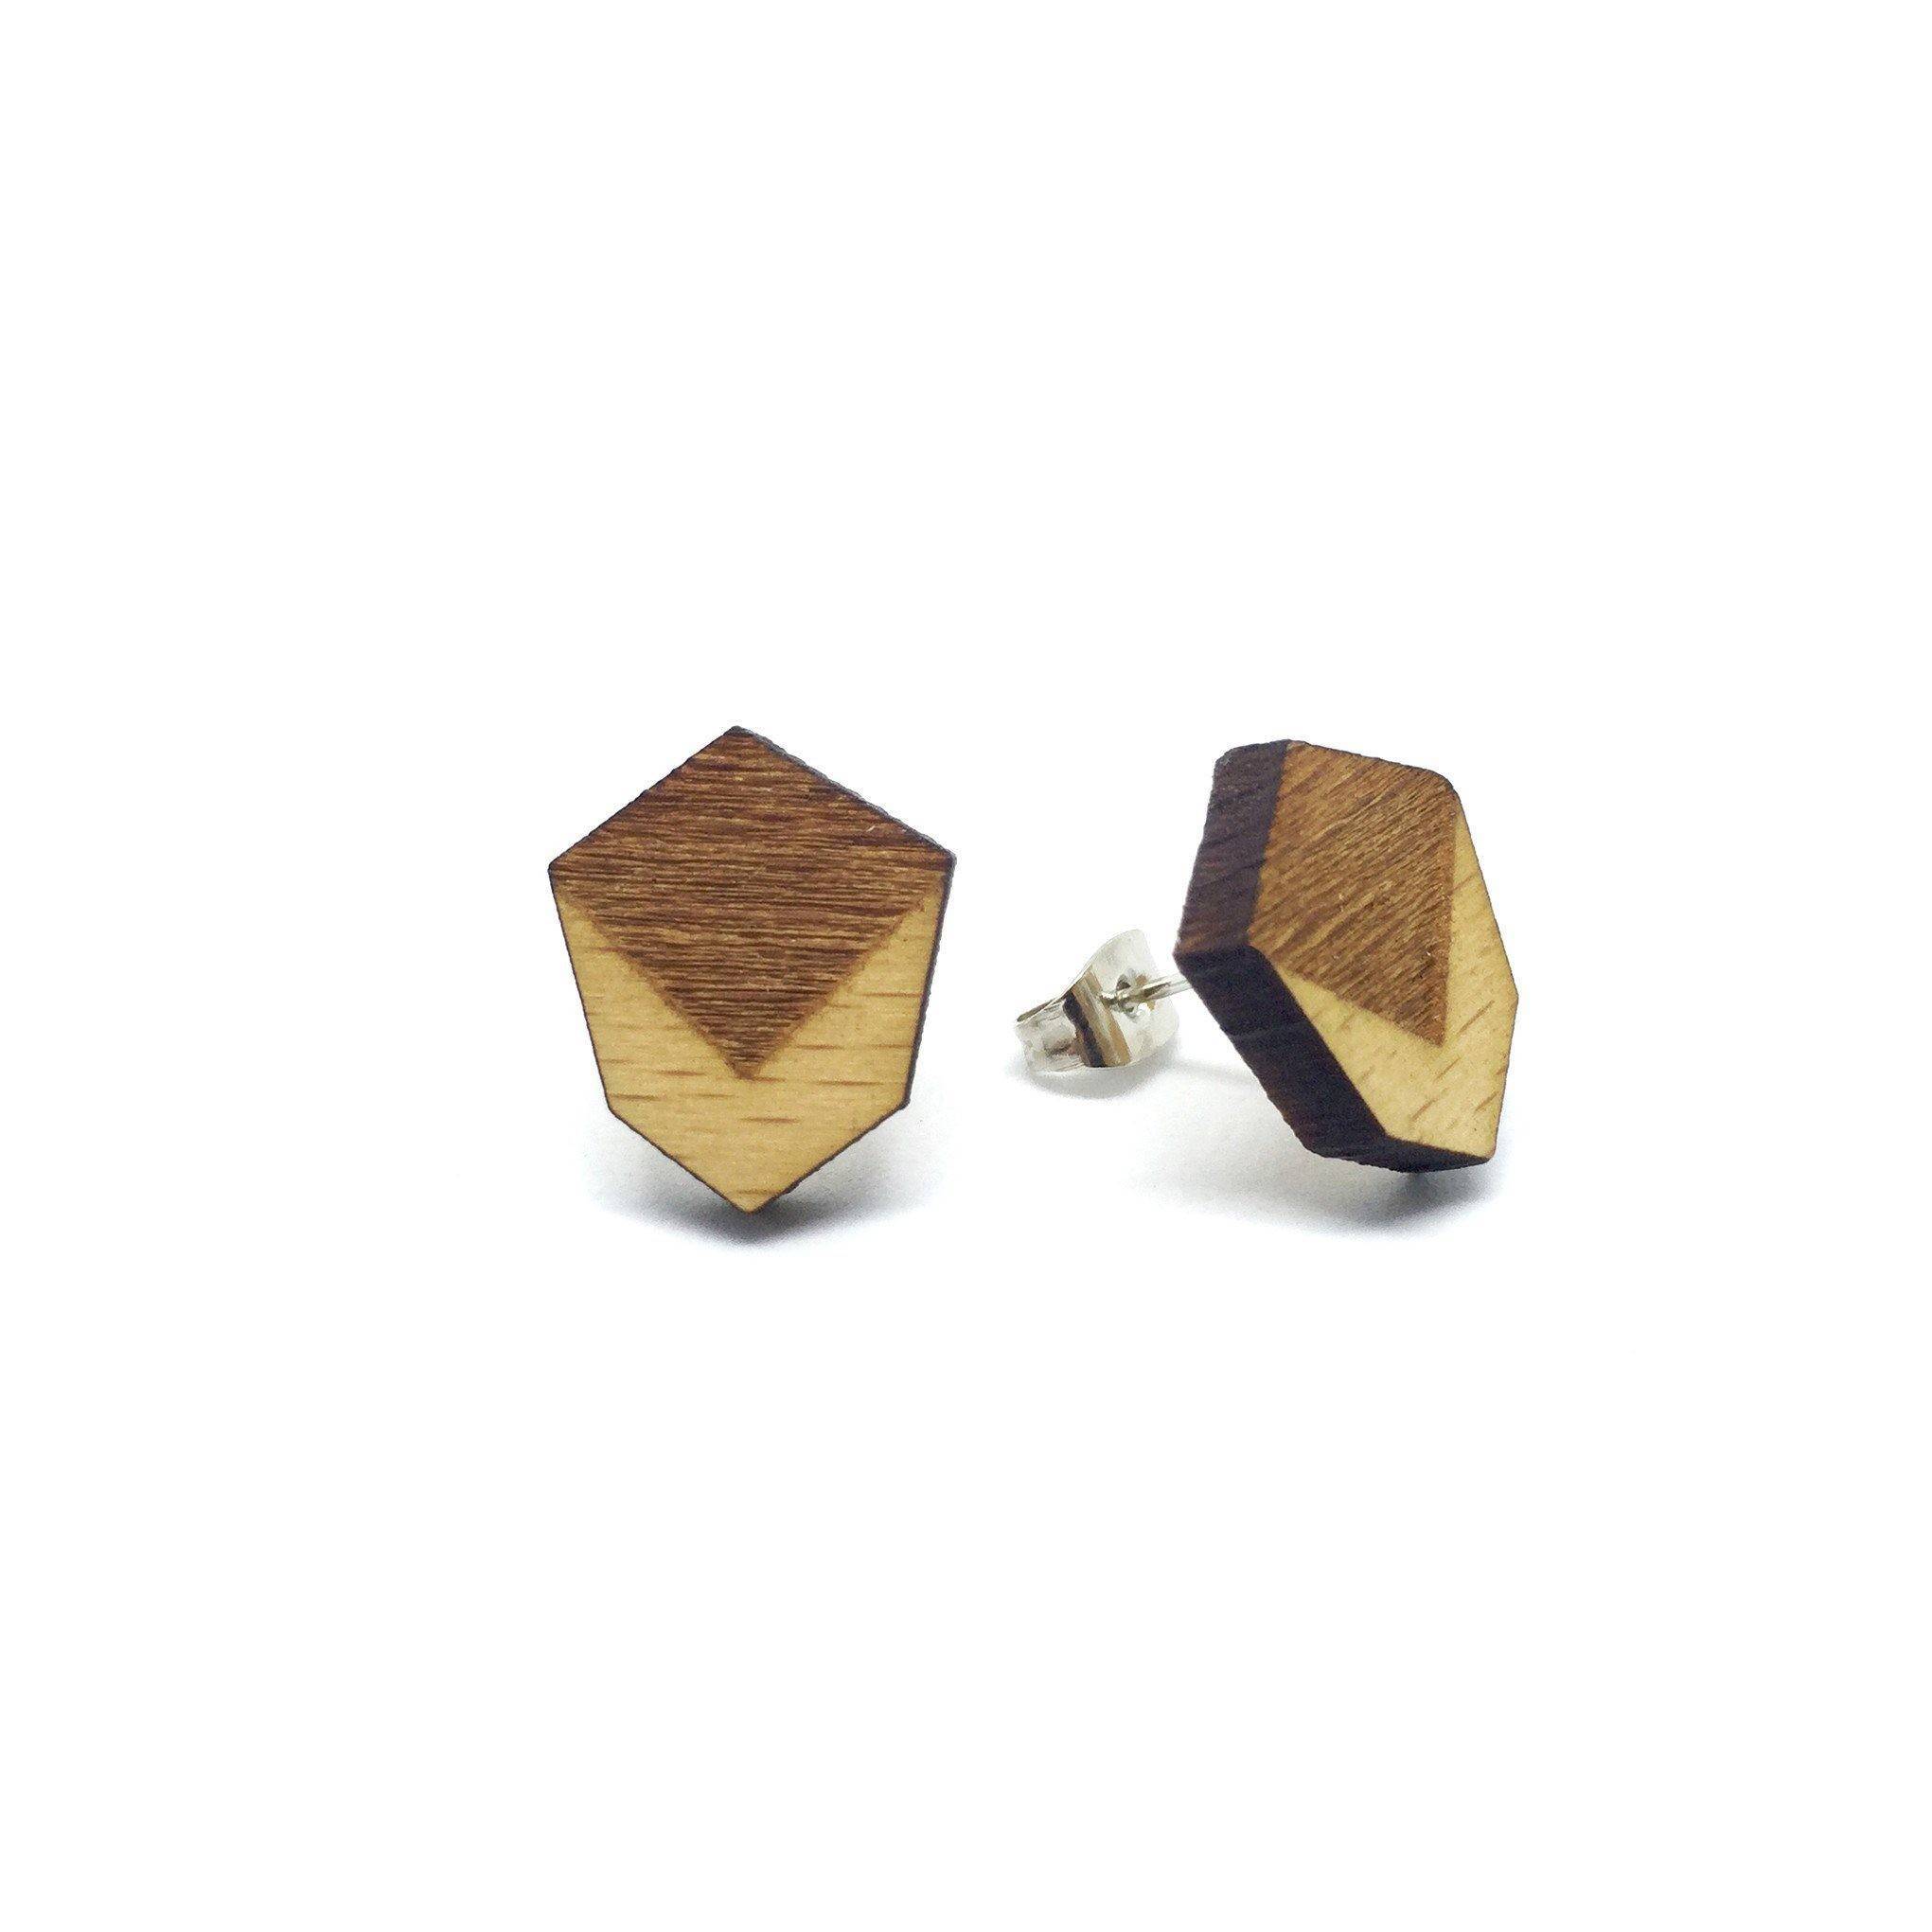 Minimalist Geometric Laser Cut Wood Earrings - Earrings - Paperdaise Accessories - Naiise